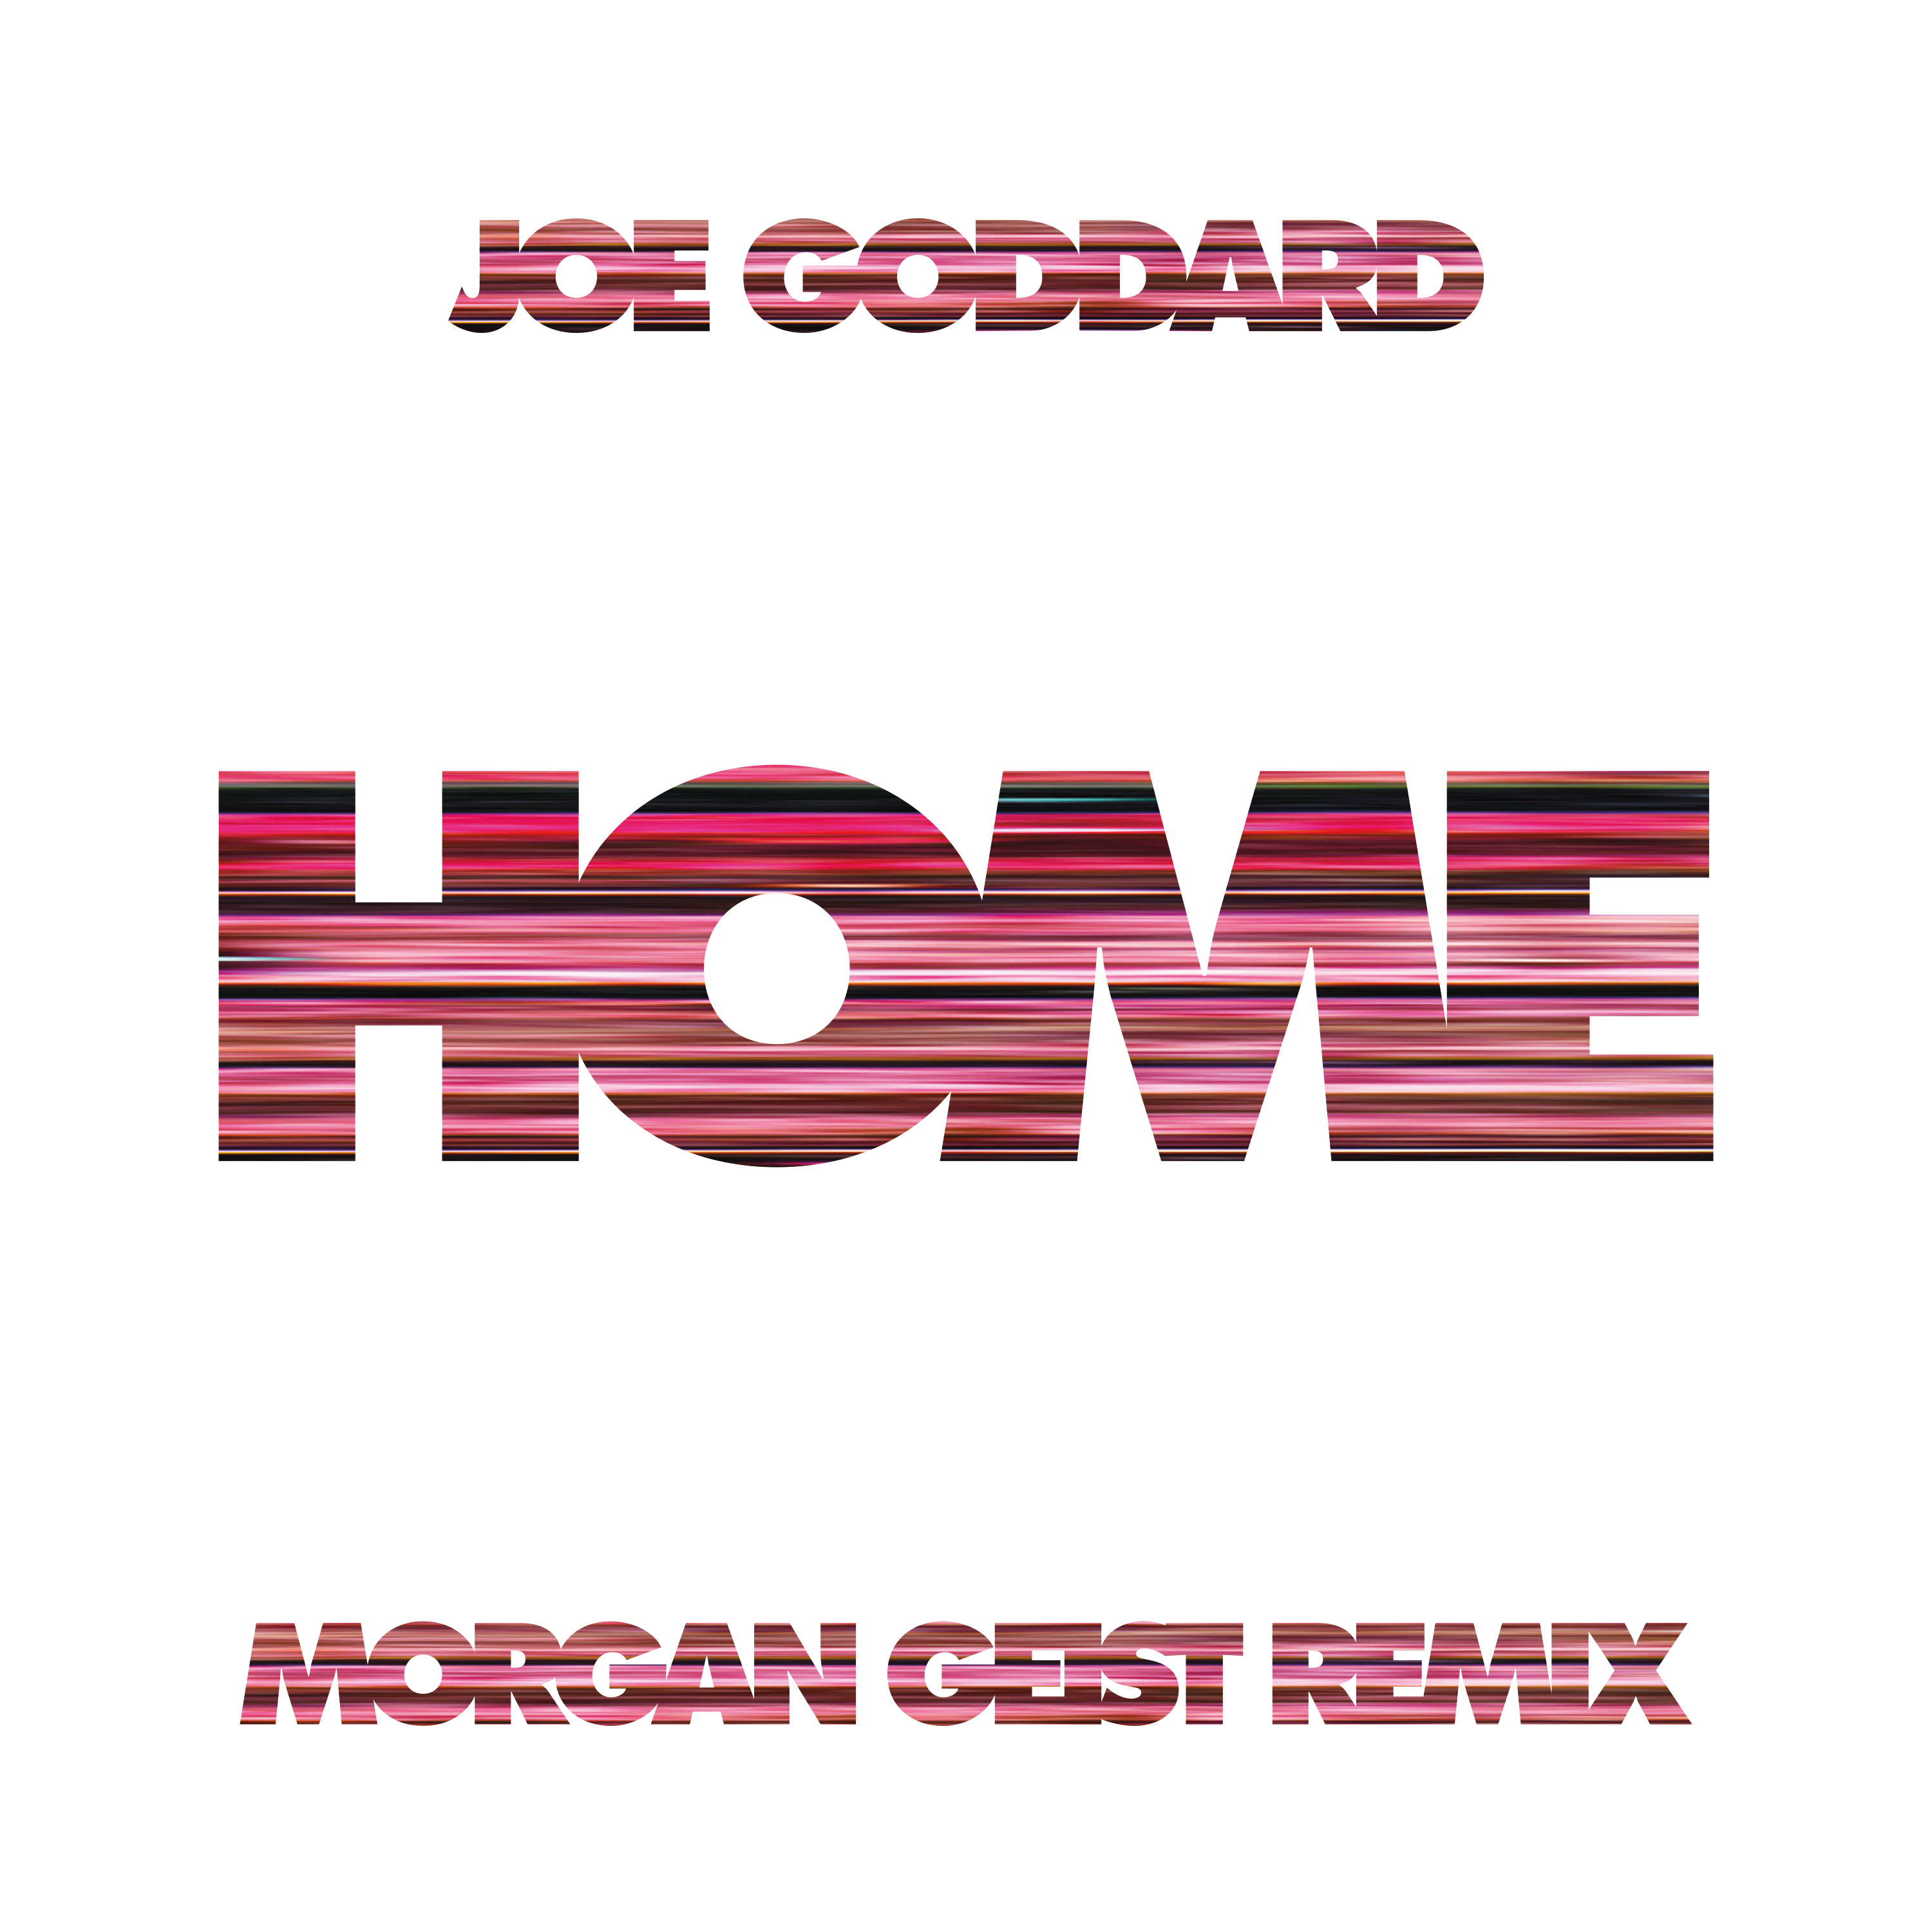 Home (Morgan Geist Bonus Beats)